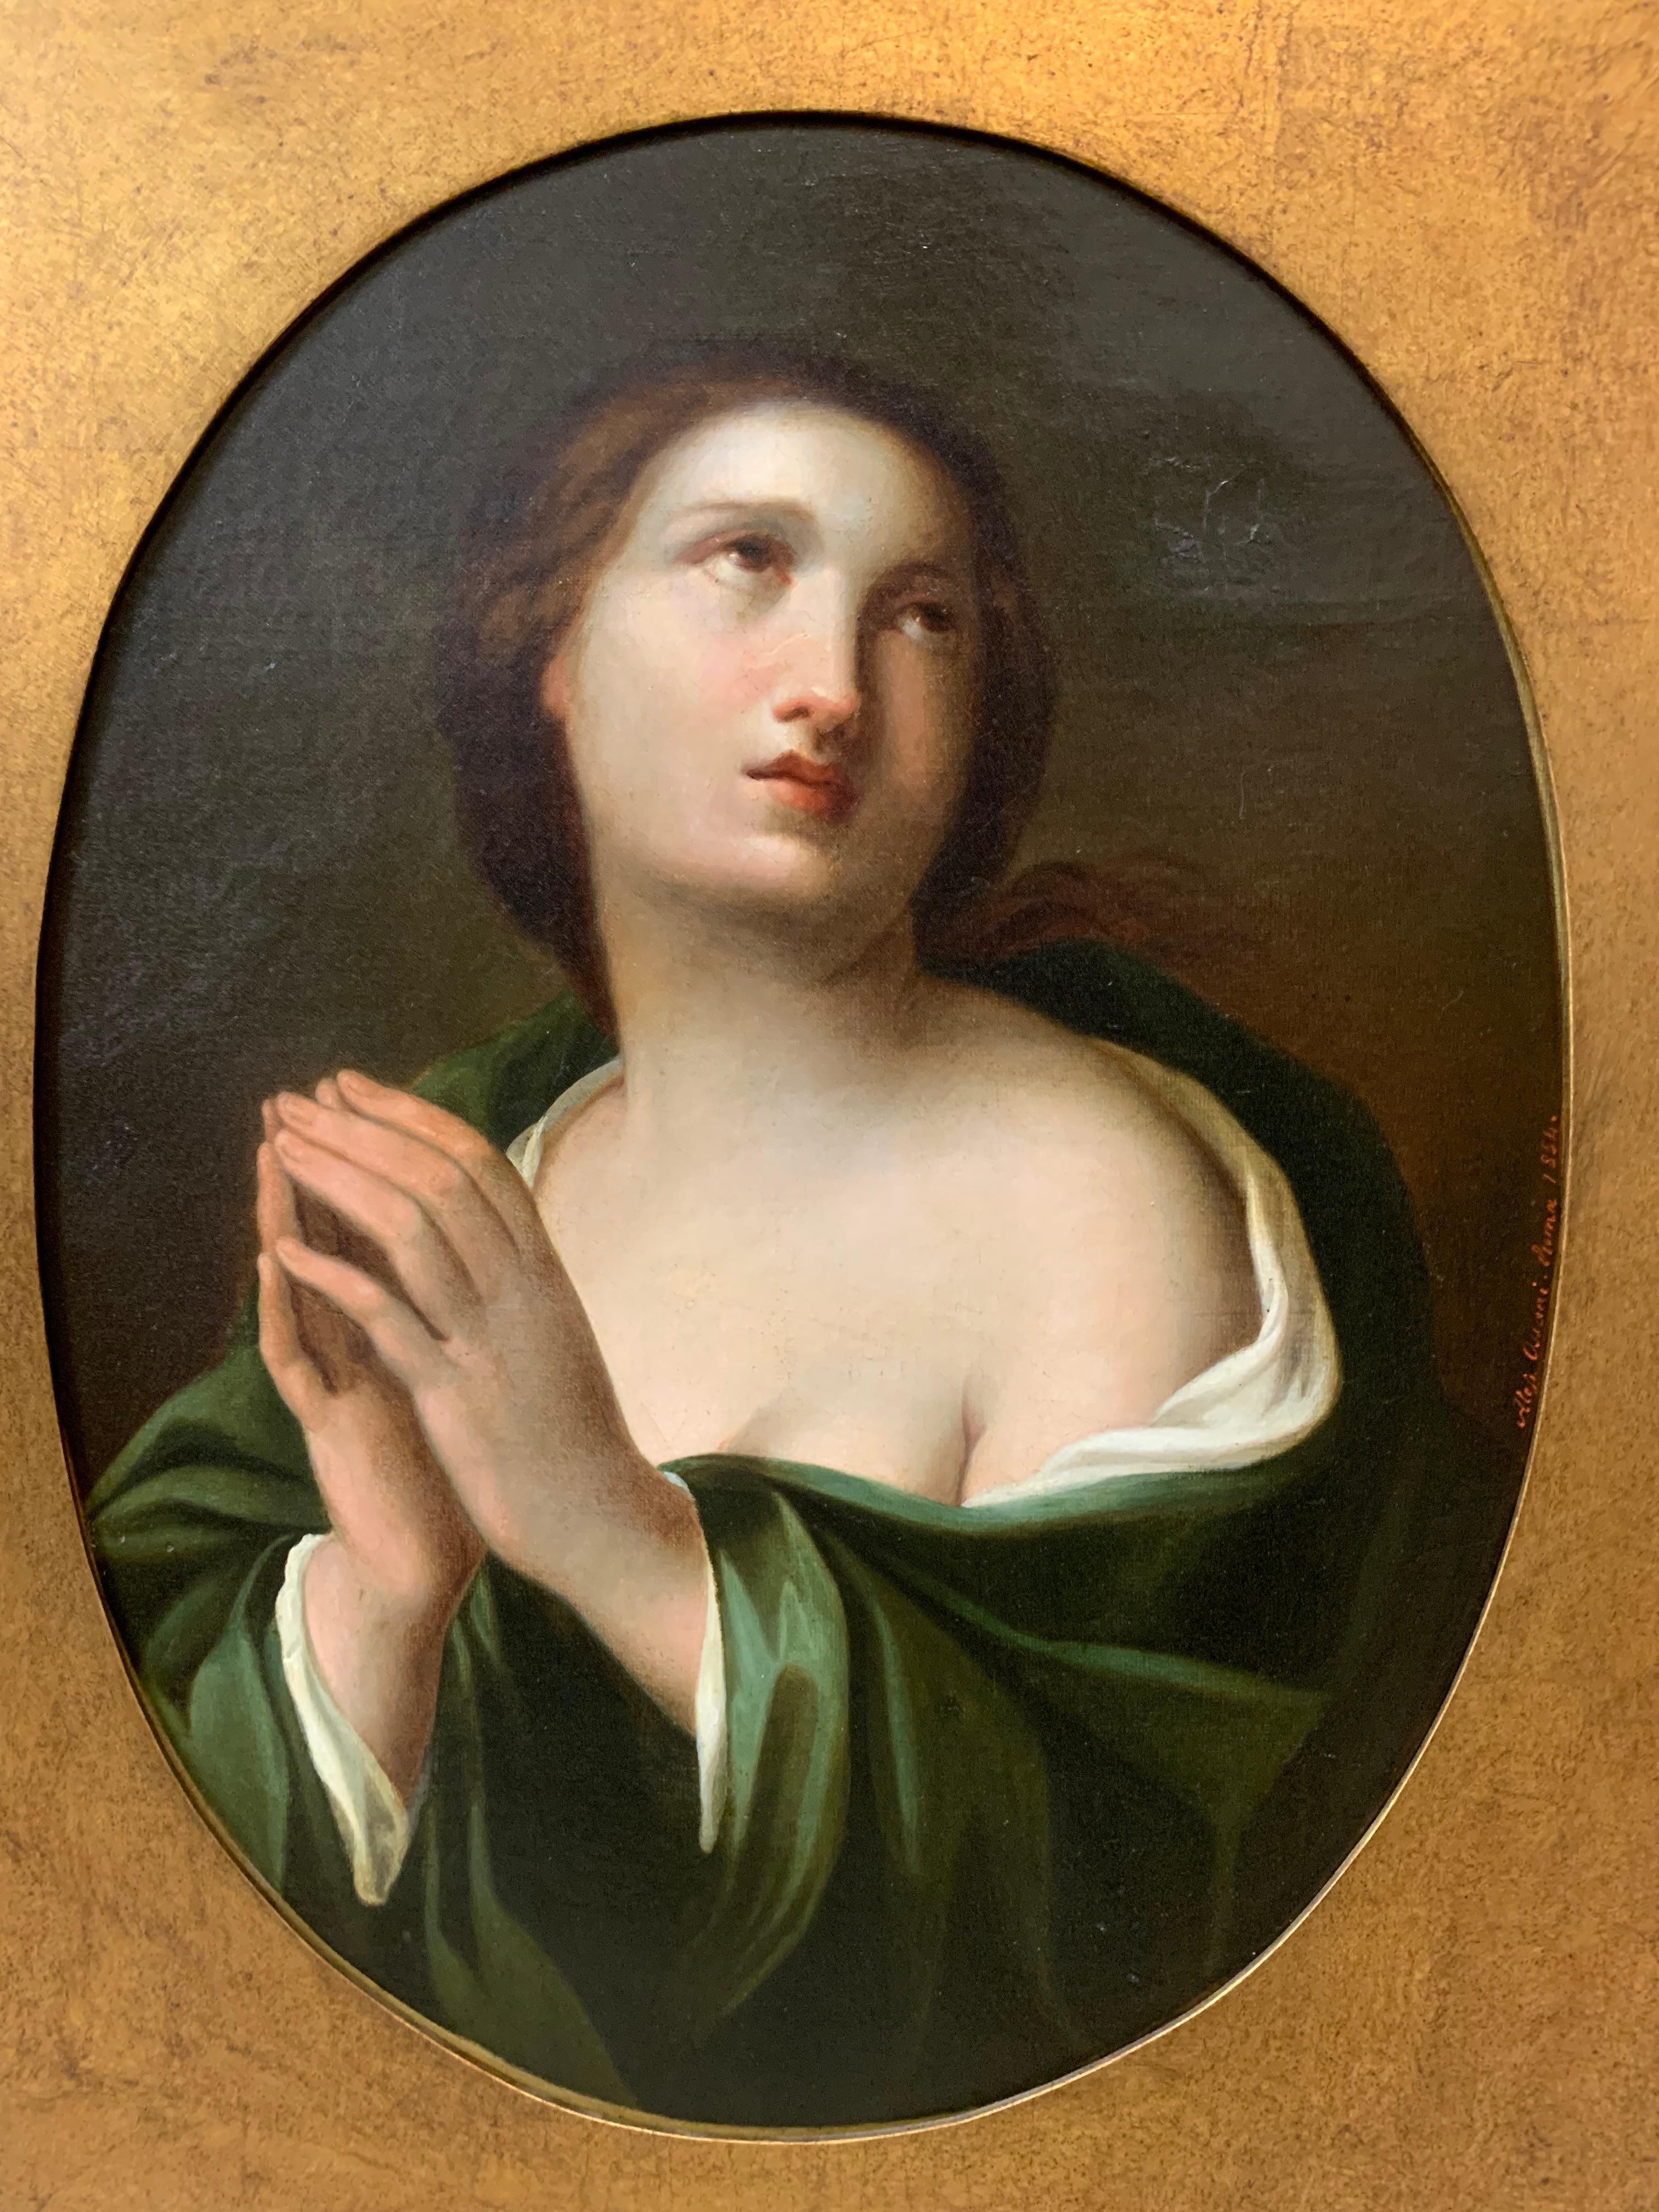 Saint Mary Magdalene at prayer, by A. Ossani. Rome, 1854 4